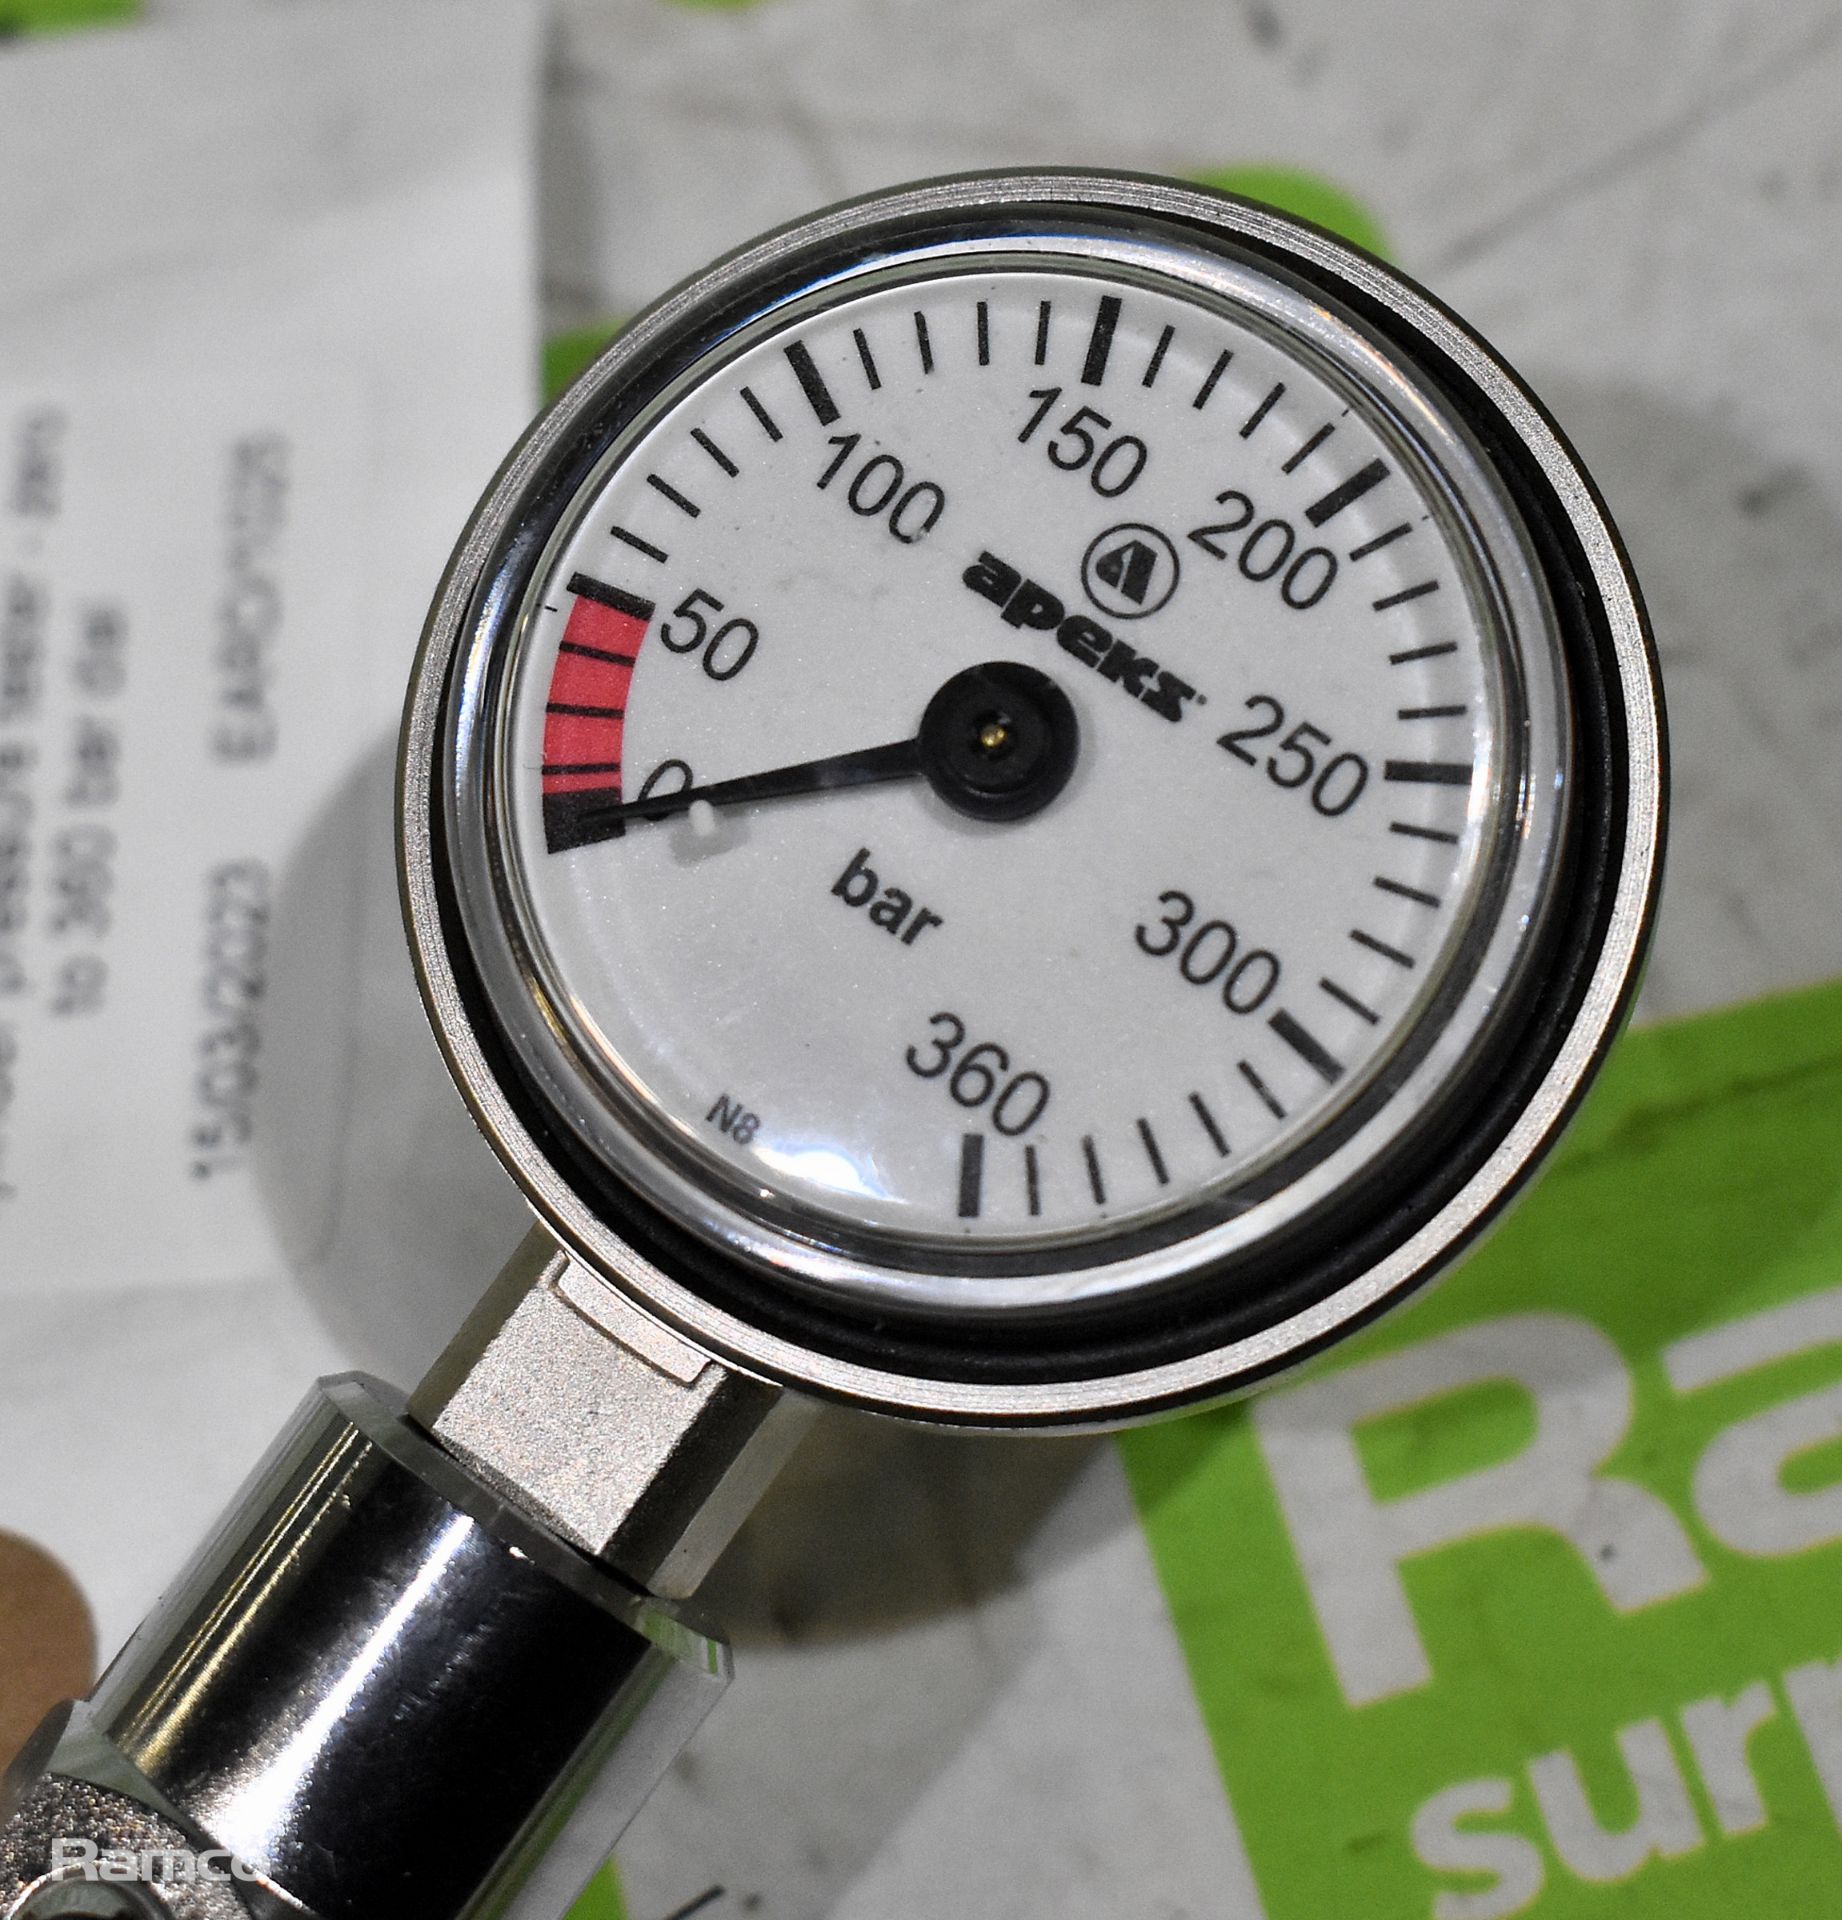 Apeks pressure gauge - cylinder pressure tester - zero to 360 bar dial - Image 2 of 3